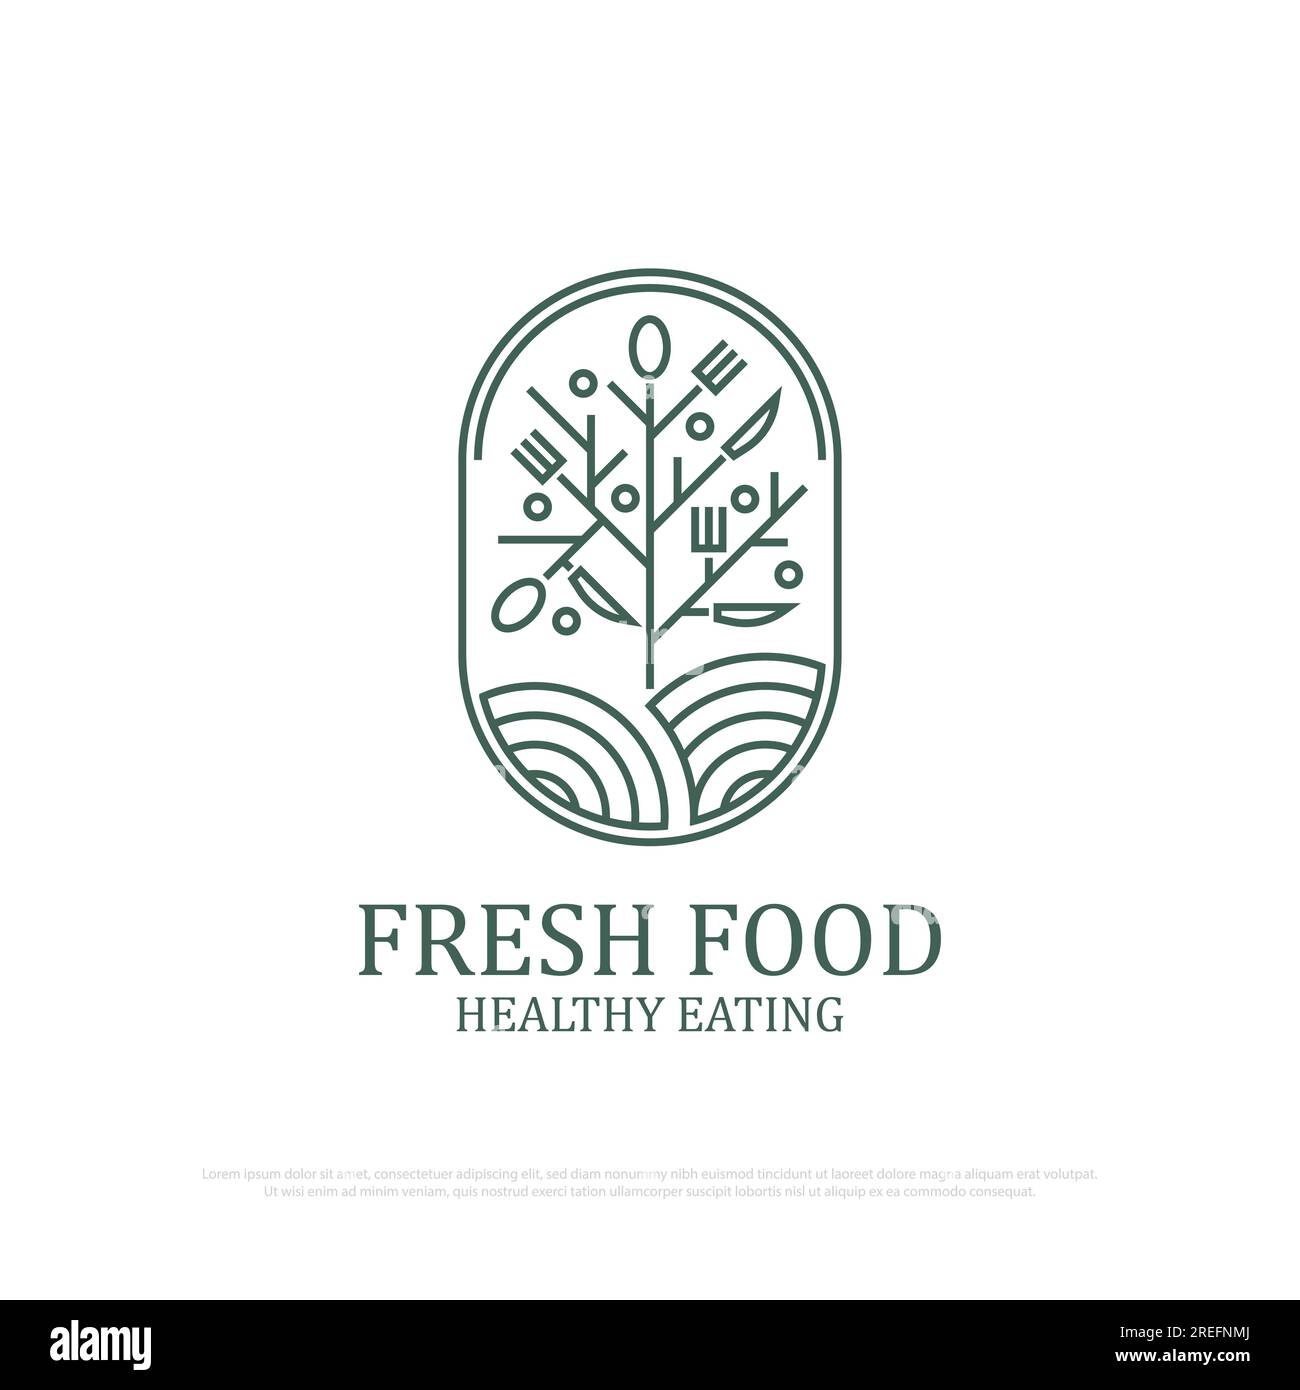 Minimalist Fresh food logo illustration,fresh logo design with outline ...